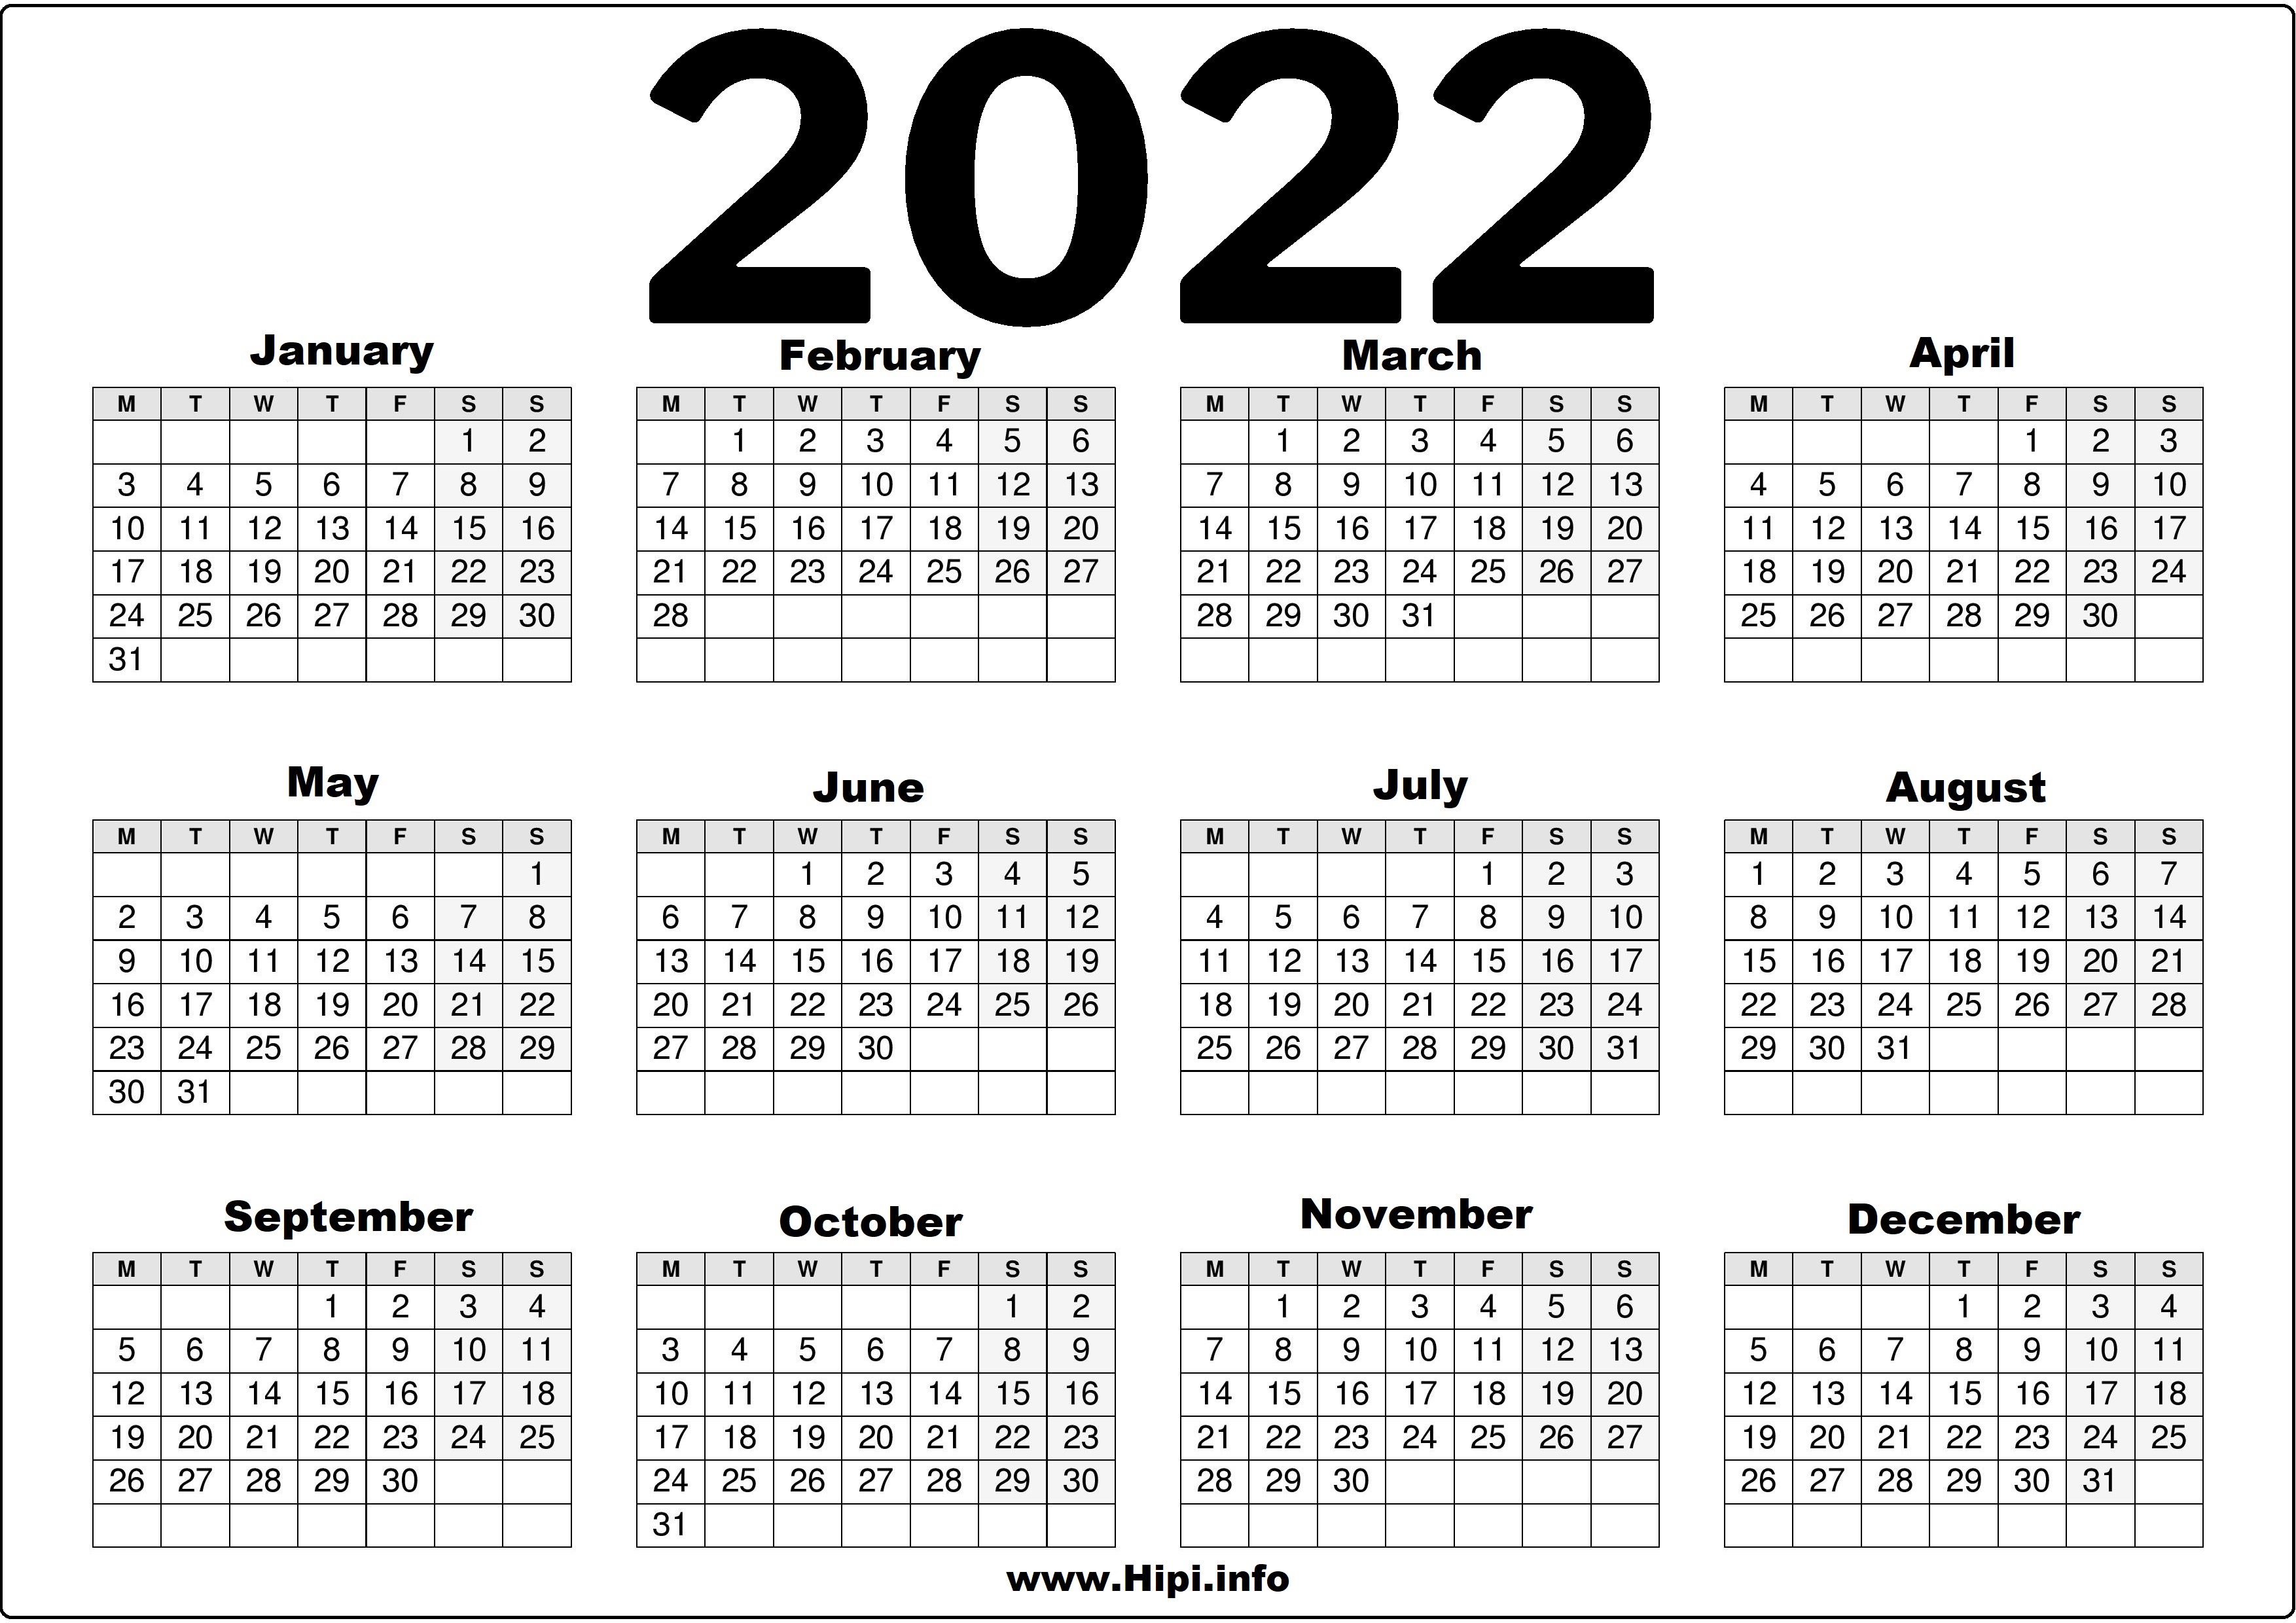 Monday Start Calendar 2022 2022 United Kingdom (Uk) Calendar Printable Free - Hipi.info | Calendars  Printable Free